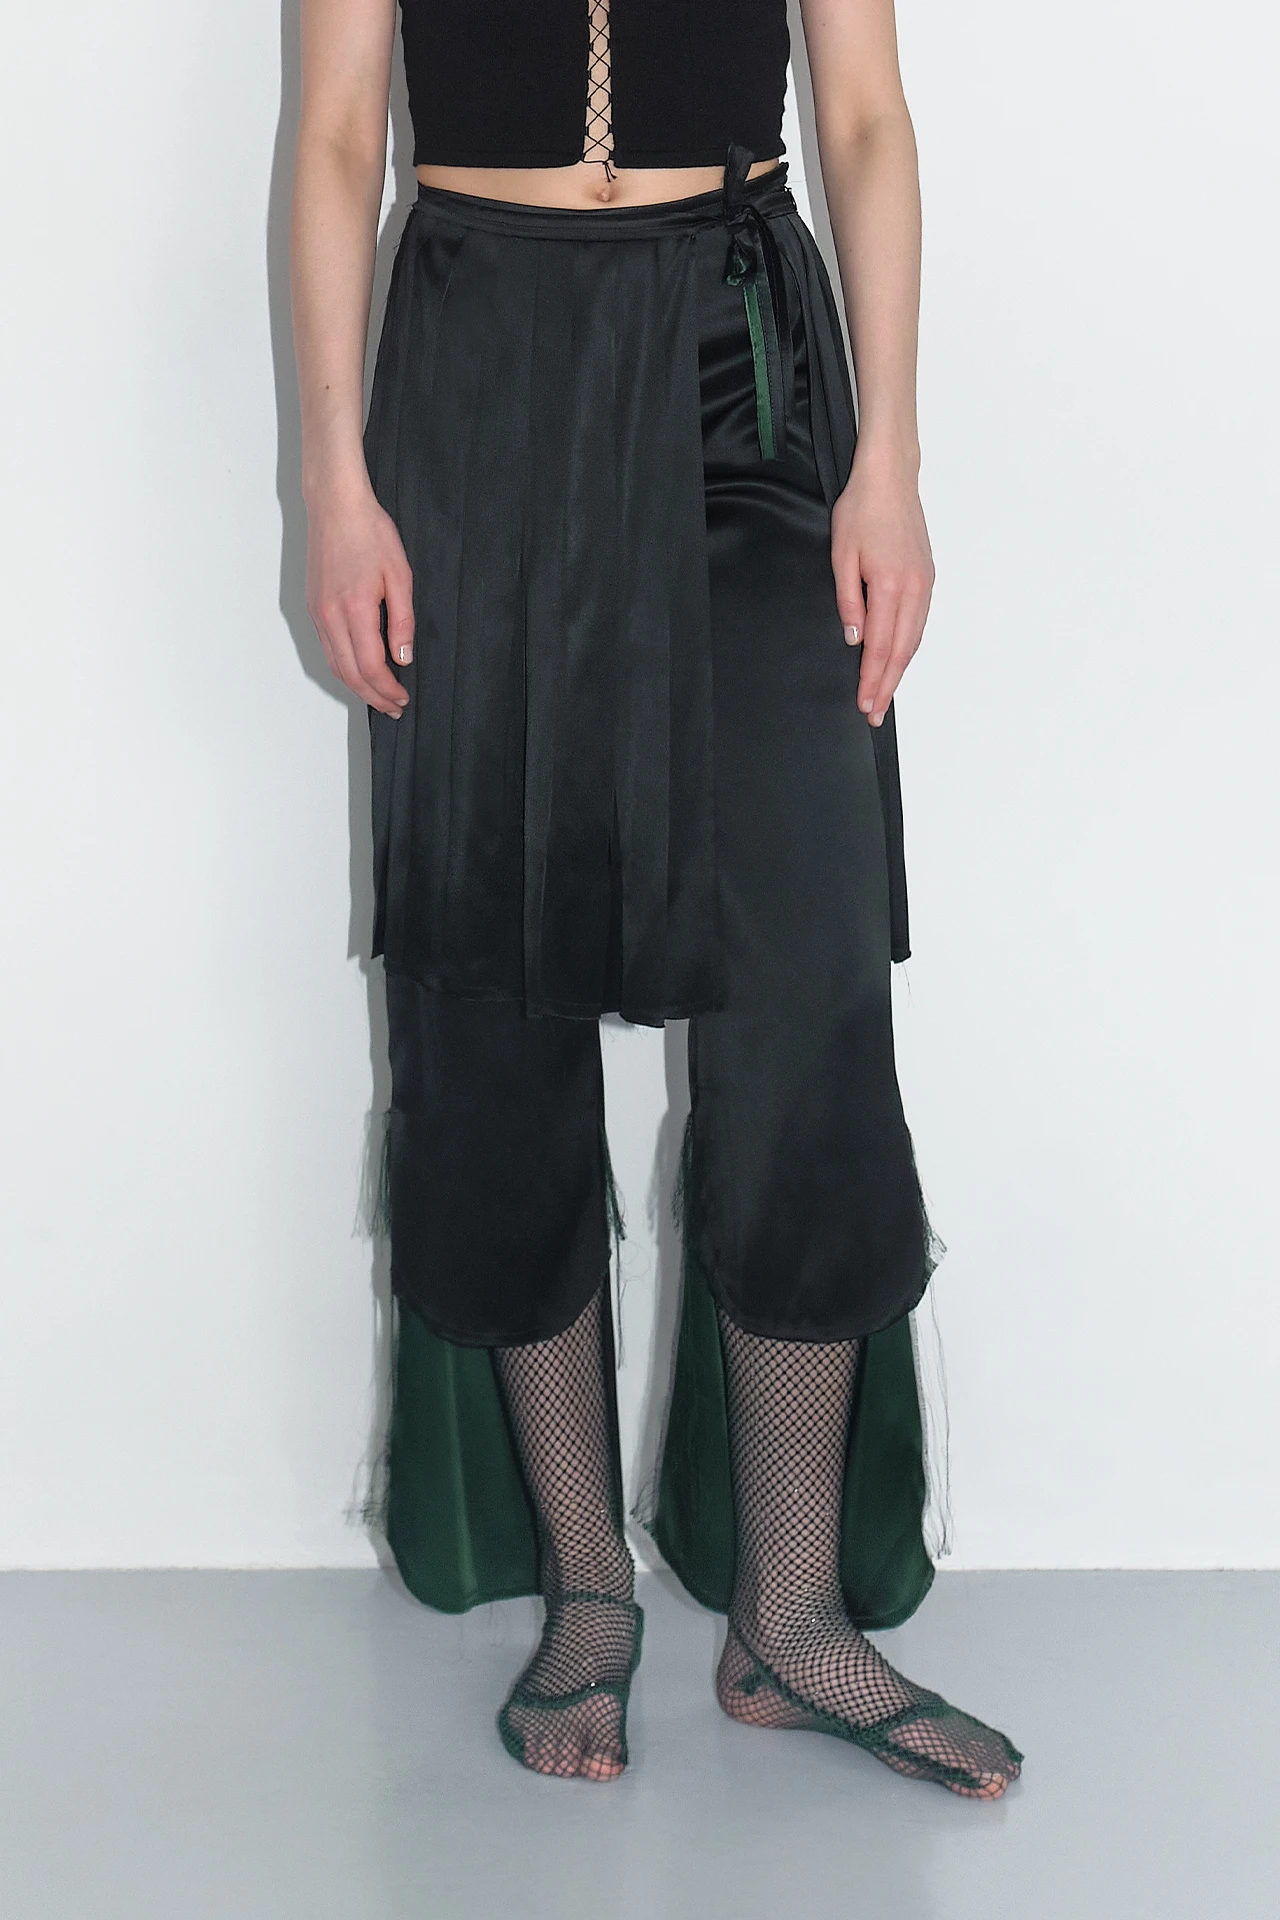 EC-miista-miyu-black-forest-skirt-01